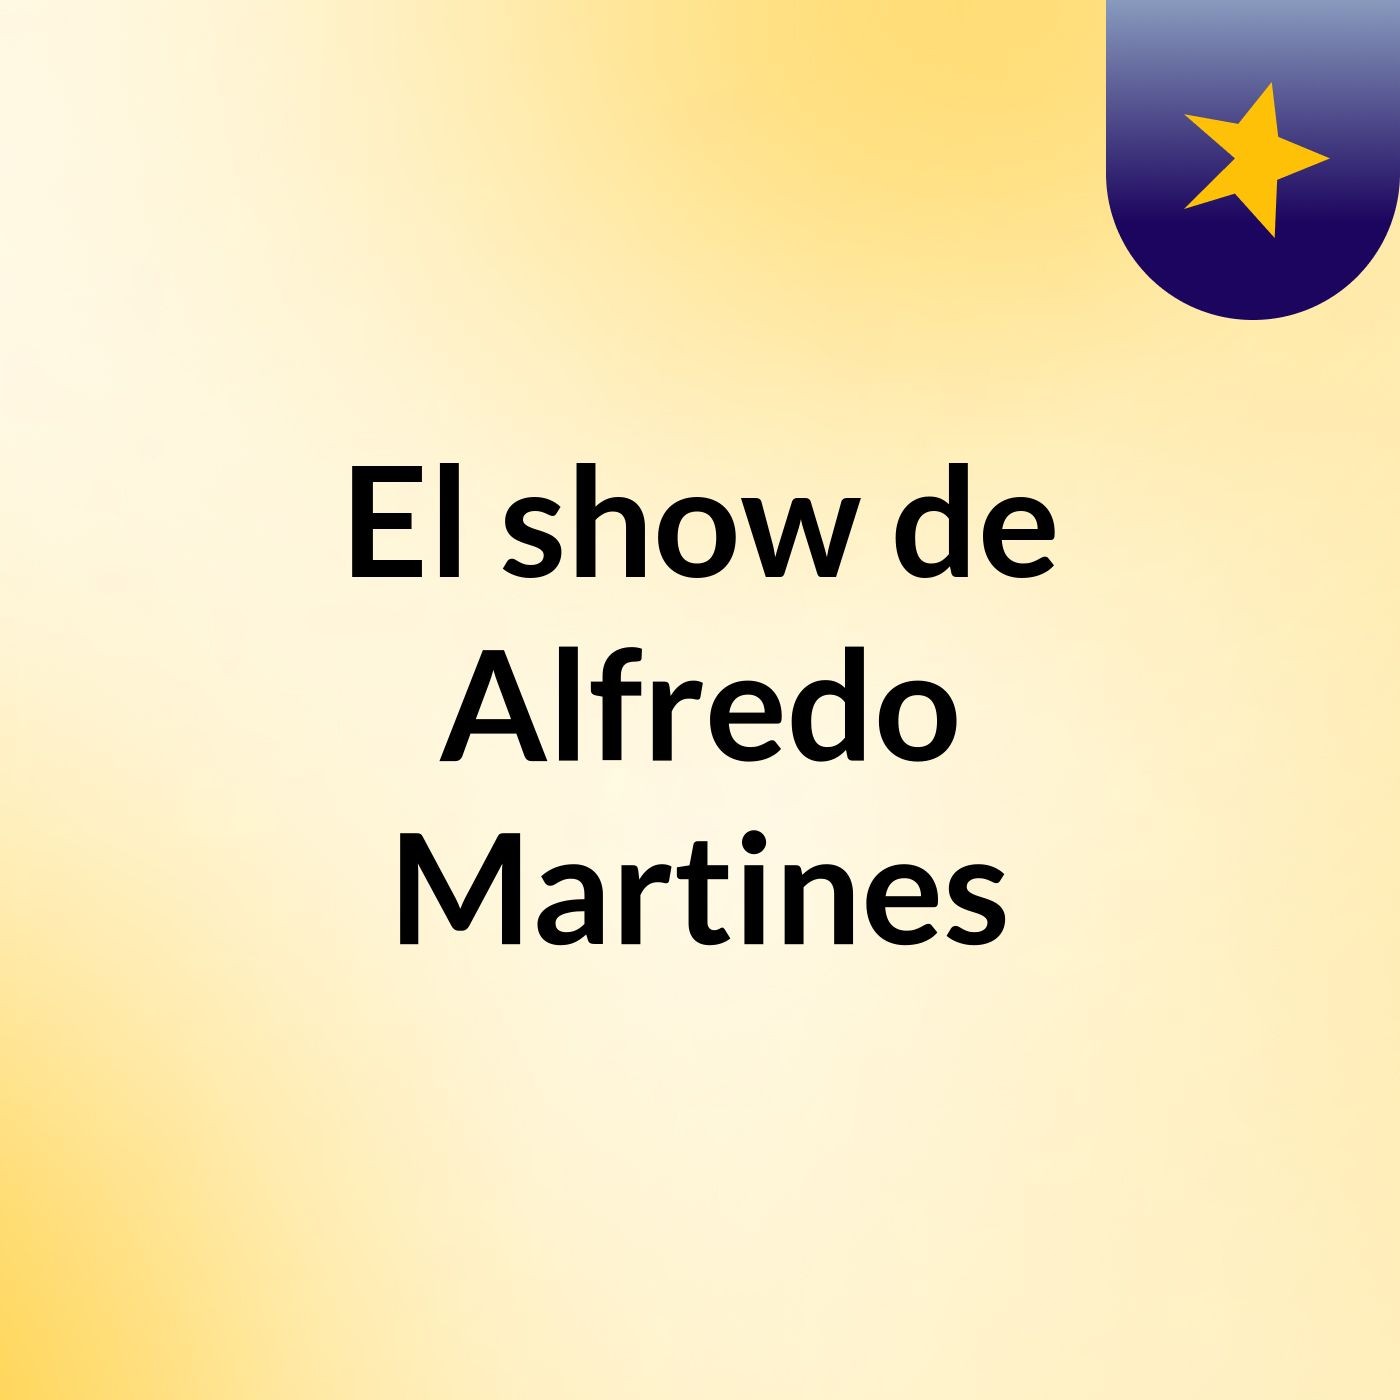 El show de Alfredo Martines